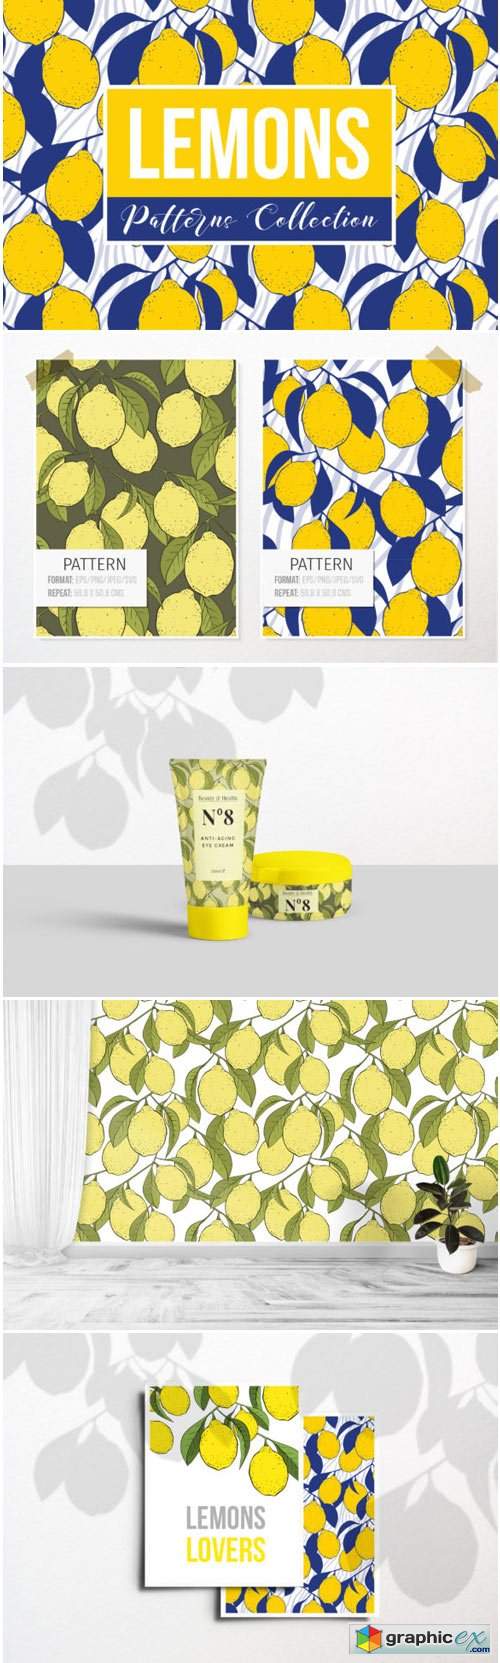 Lemons Patterns Collection